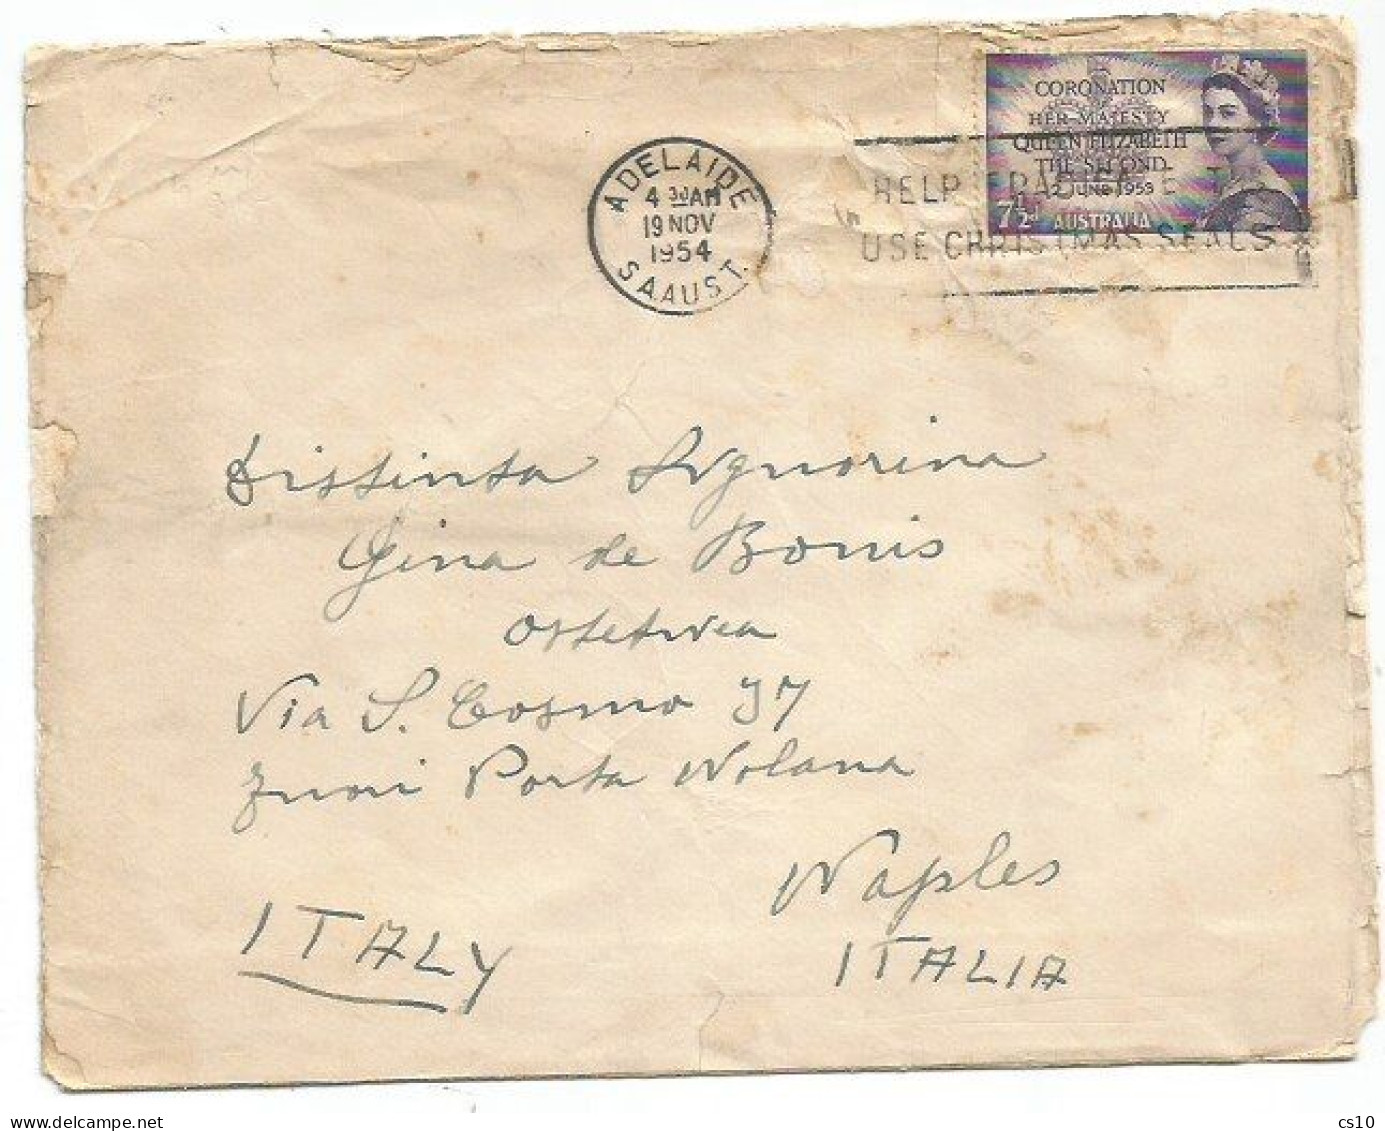 Australia Coronation Day 1953 D.7.1/2 Solo Franking AirmailCV Adelaide 19nov1954 To Italy - Briefe U. Dokumente